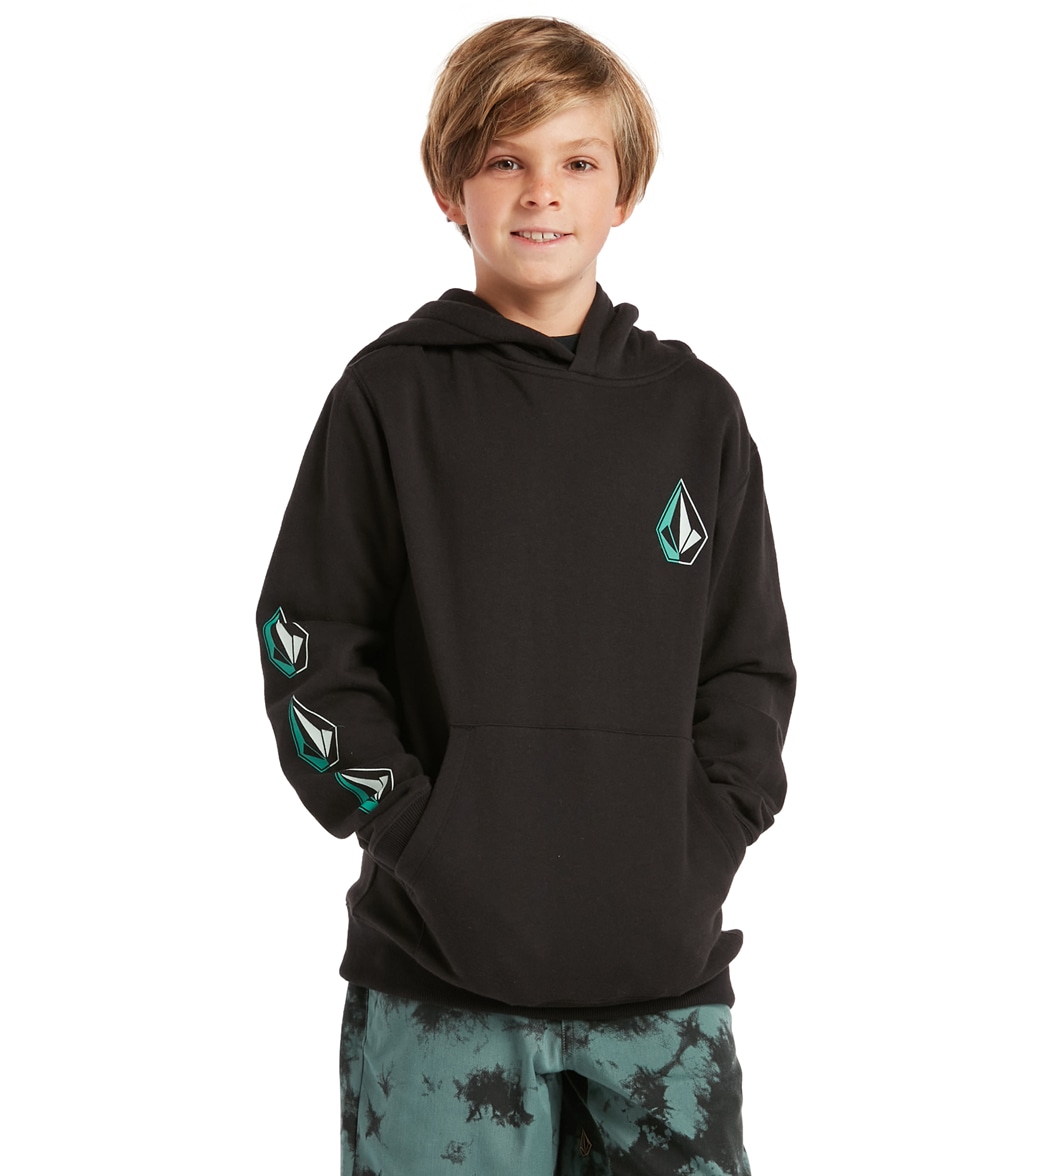 Volcom Boys' Iconic Stone Pullover Sweatshirt - New Black Large Cotton/Polyester - Swimoutlet.com